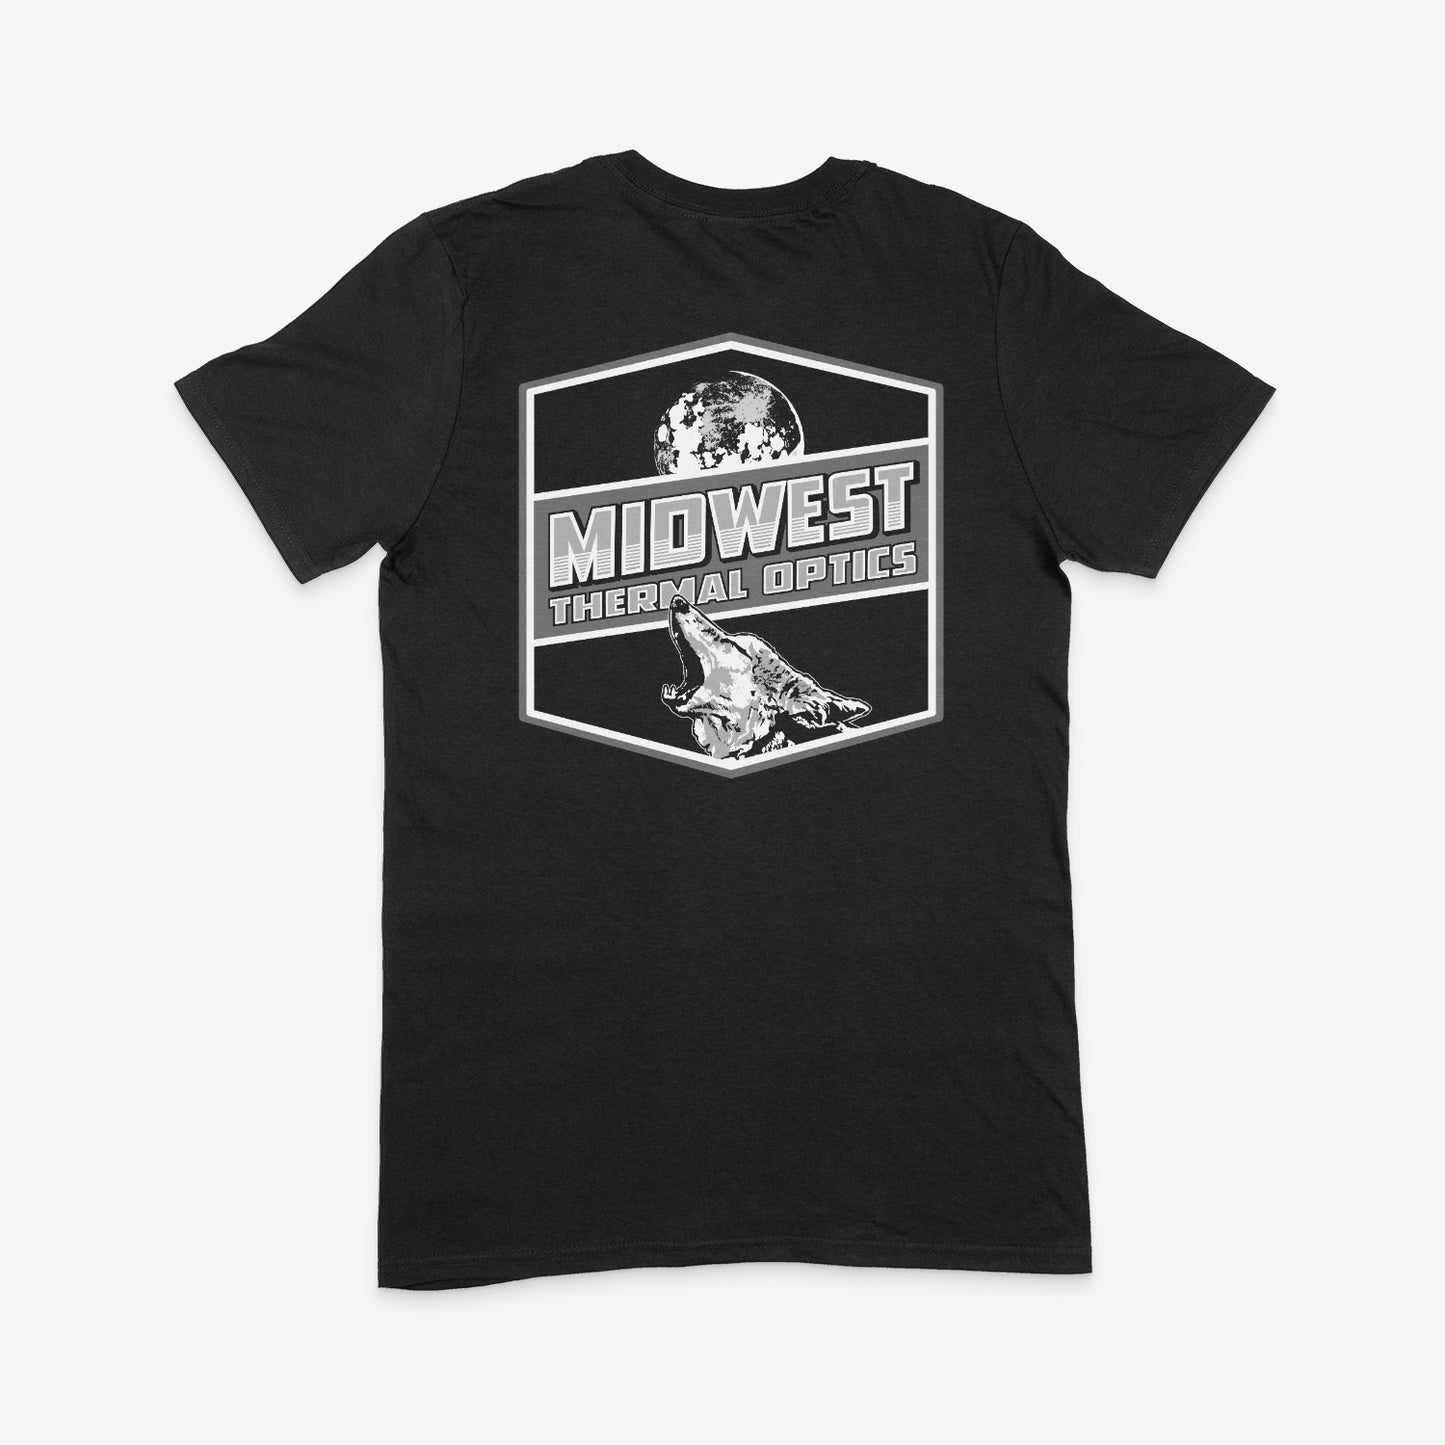 Midwest Thermal Optics T-shirt